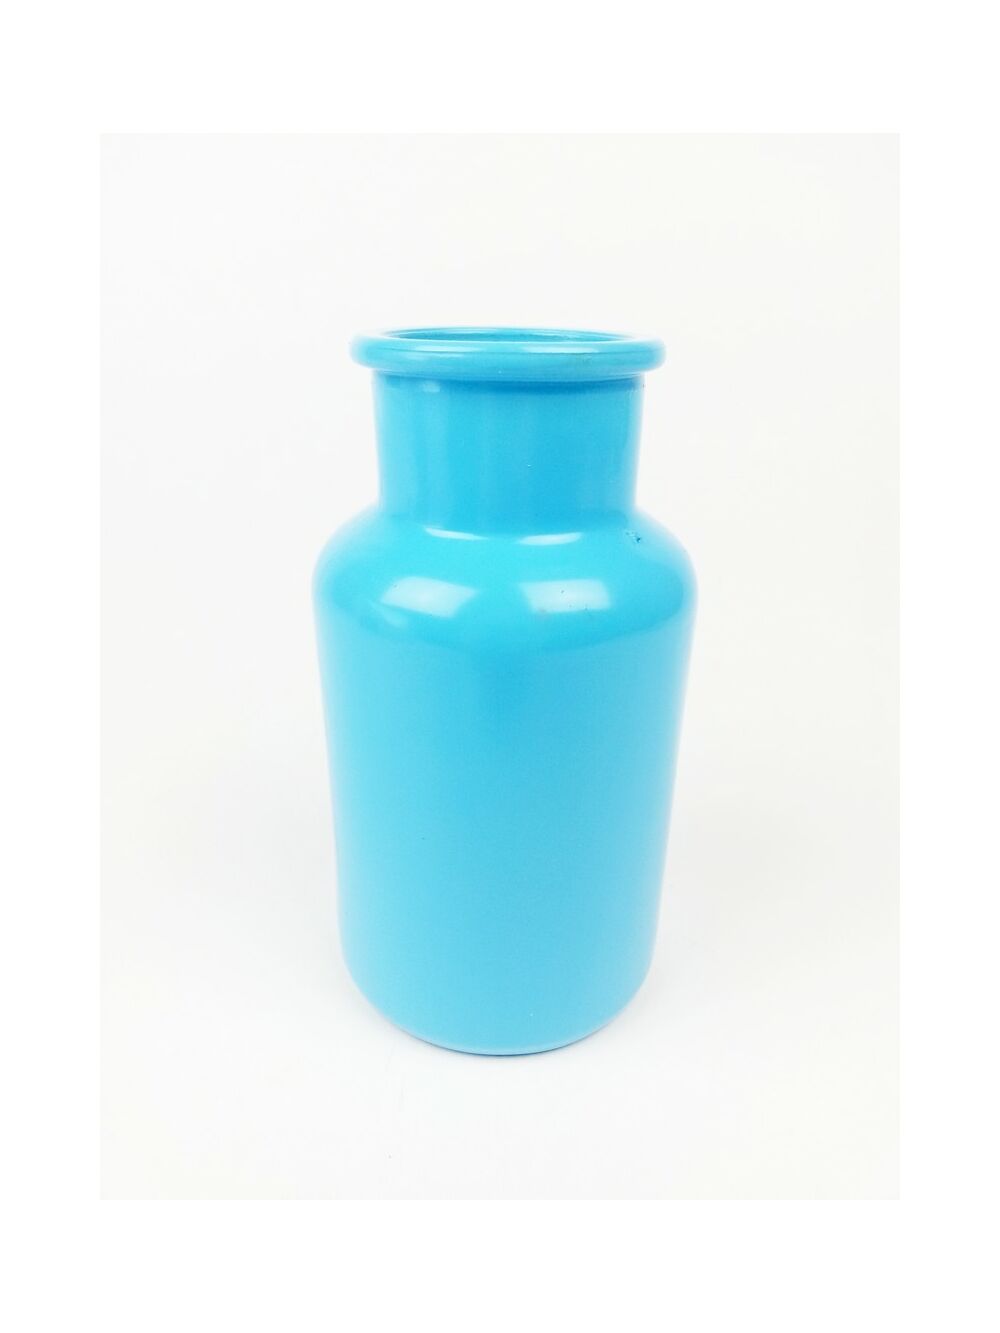 Üveg palack nyakas - Kék